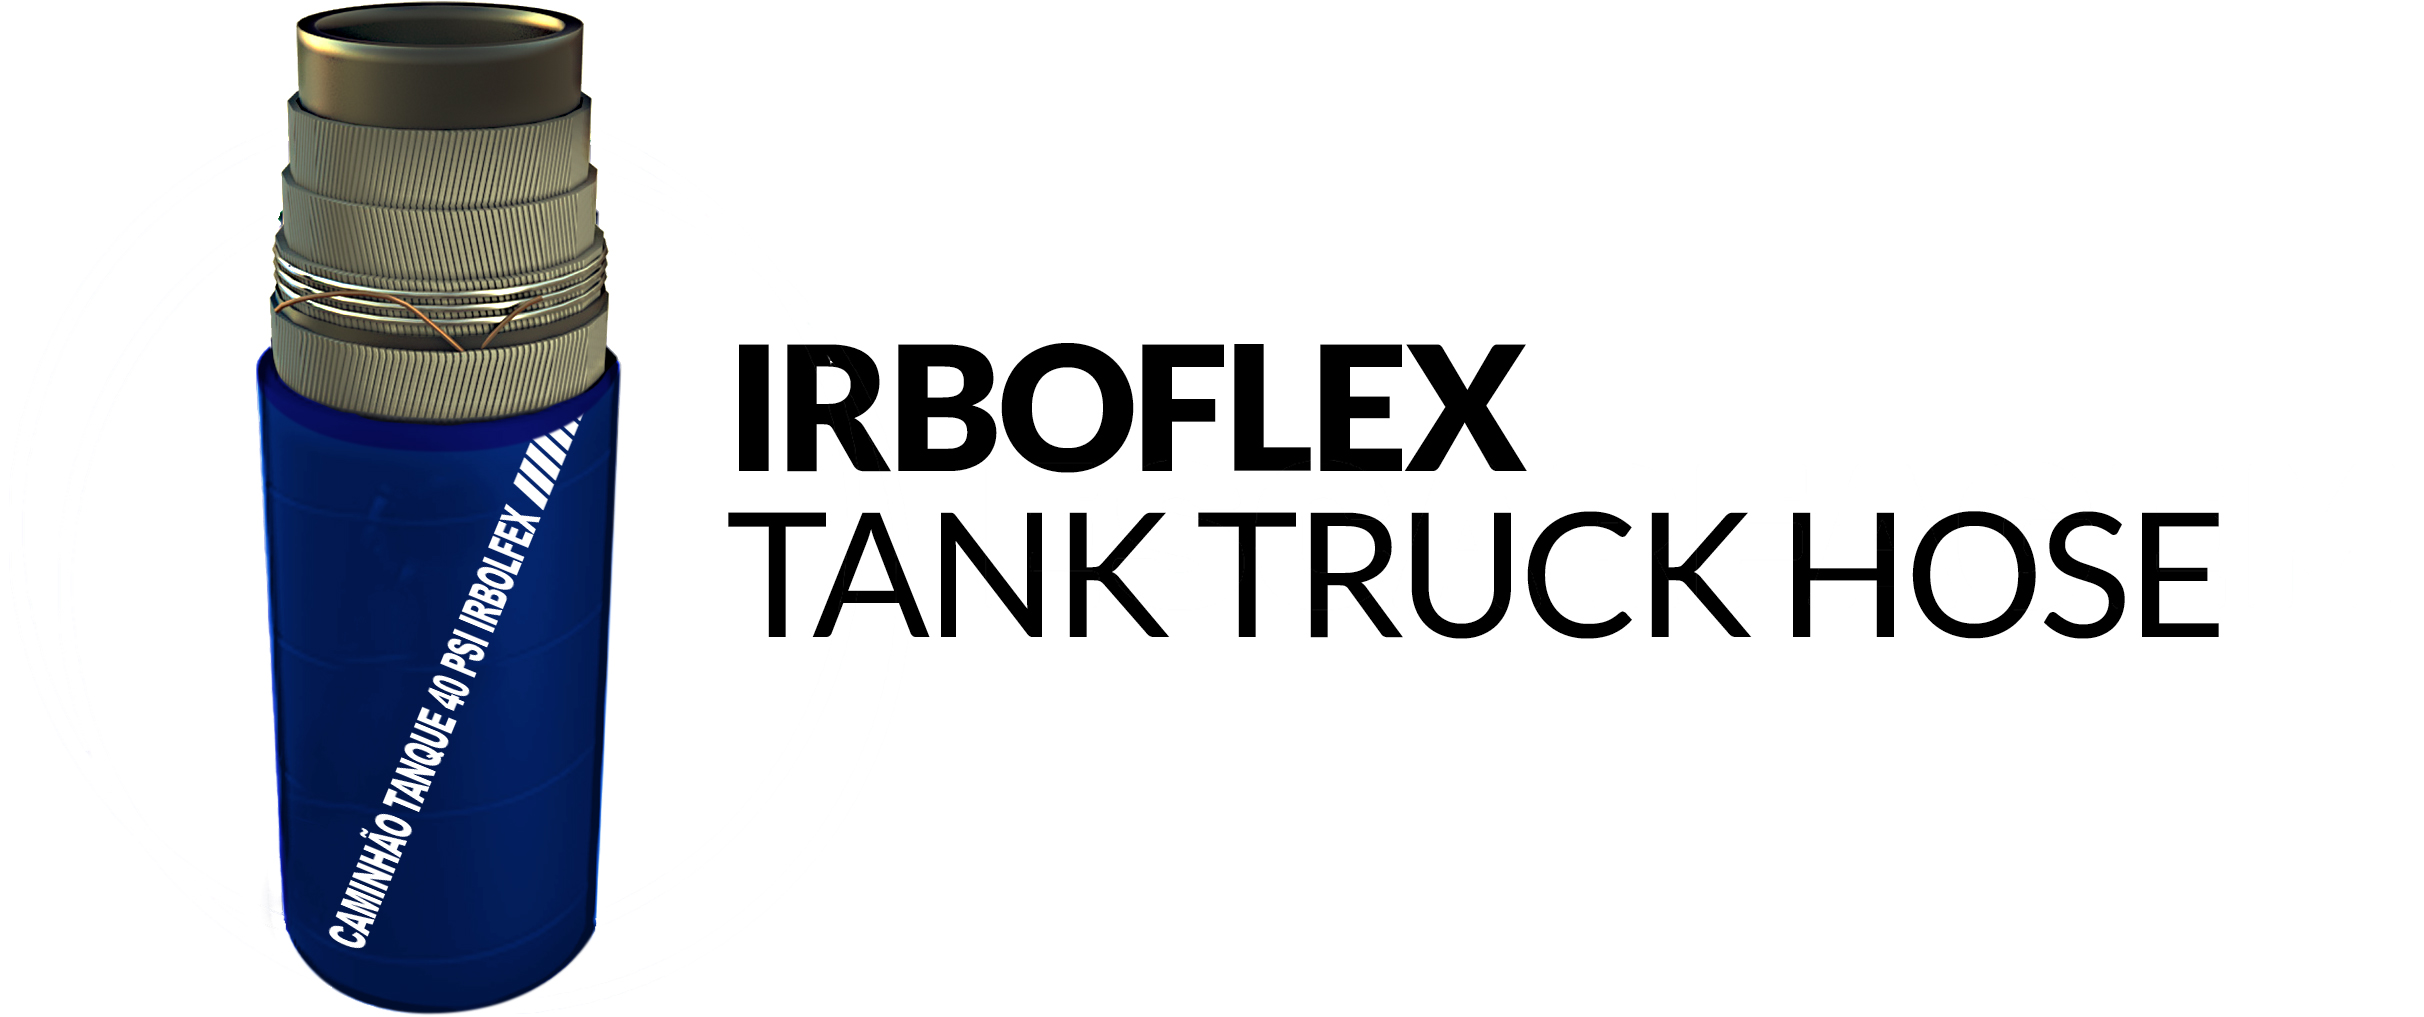 caminhao-tanque-40-psi-_irboflex-tank-truck-hose-copia